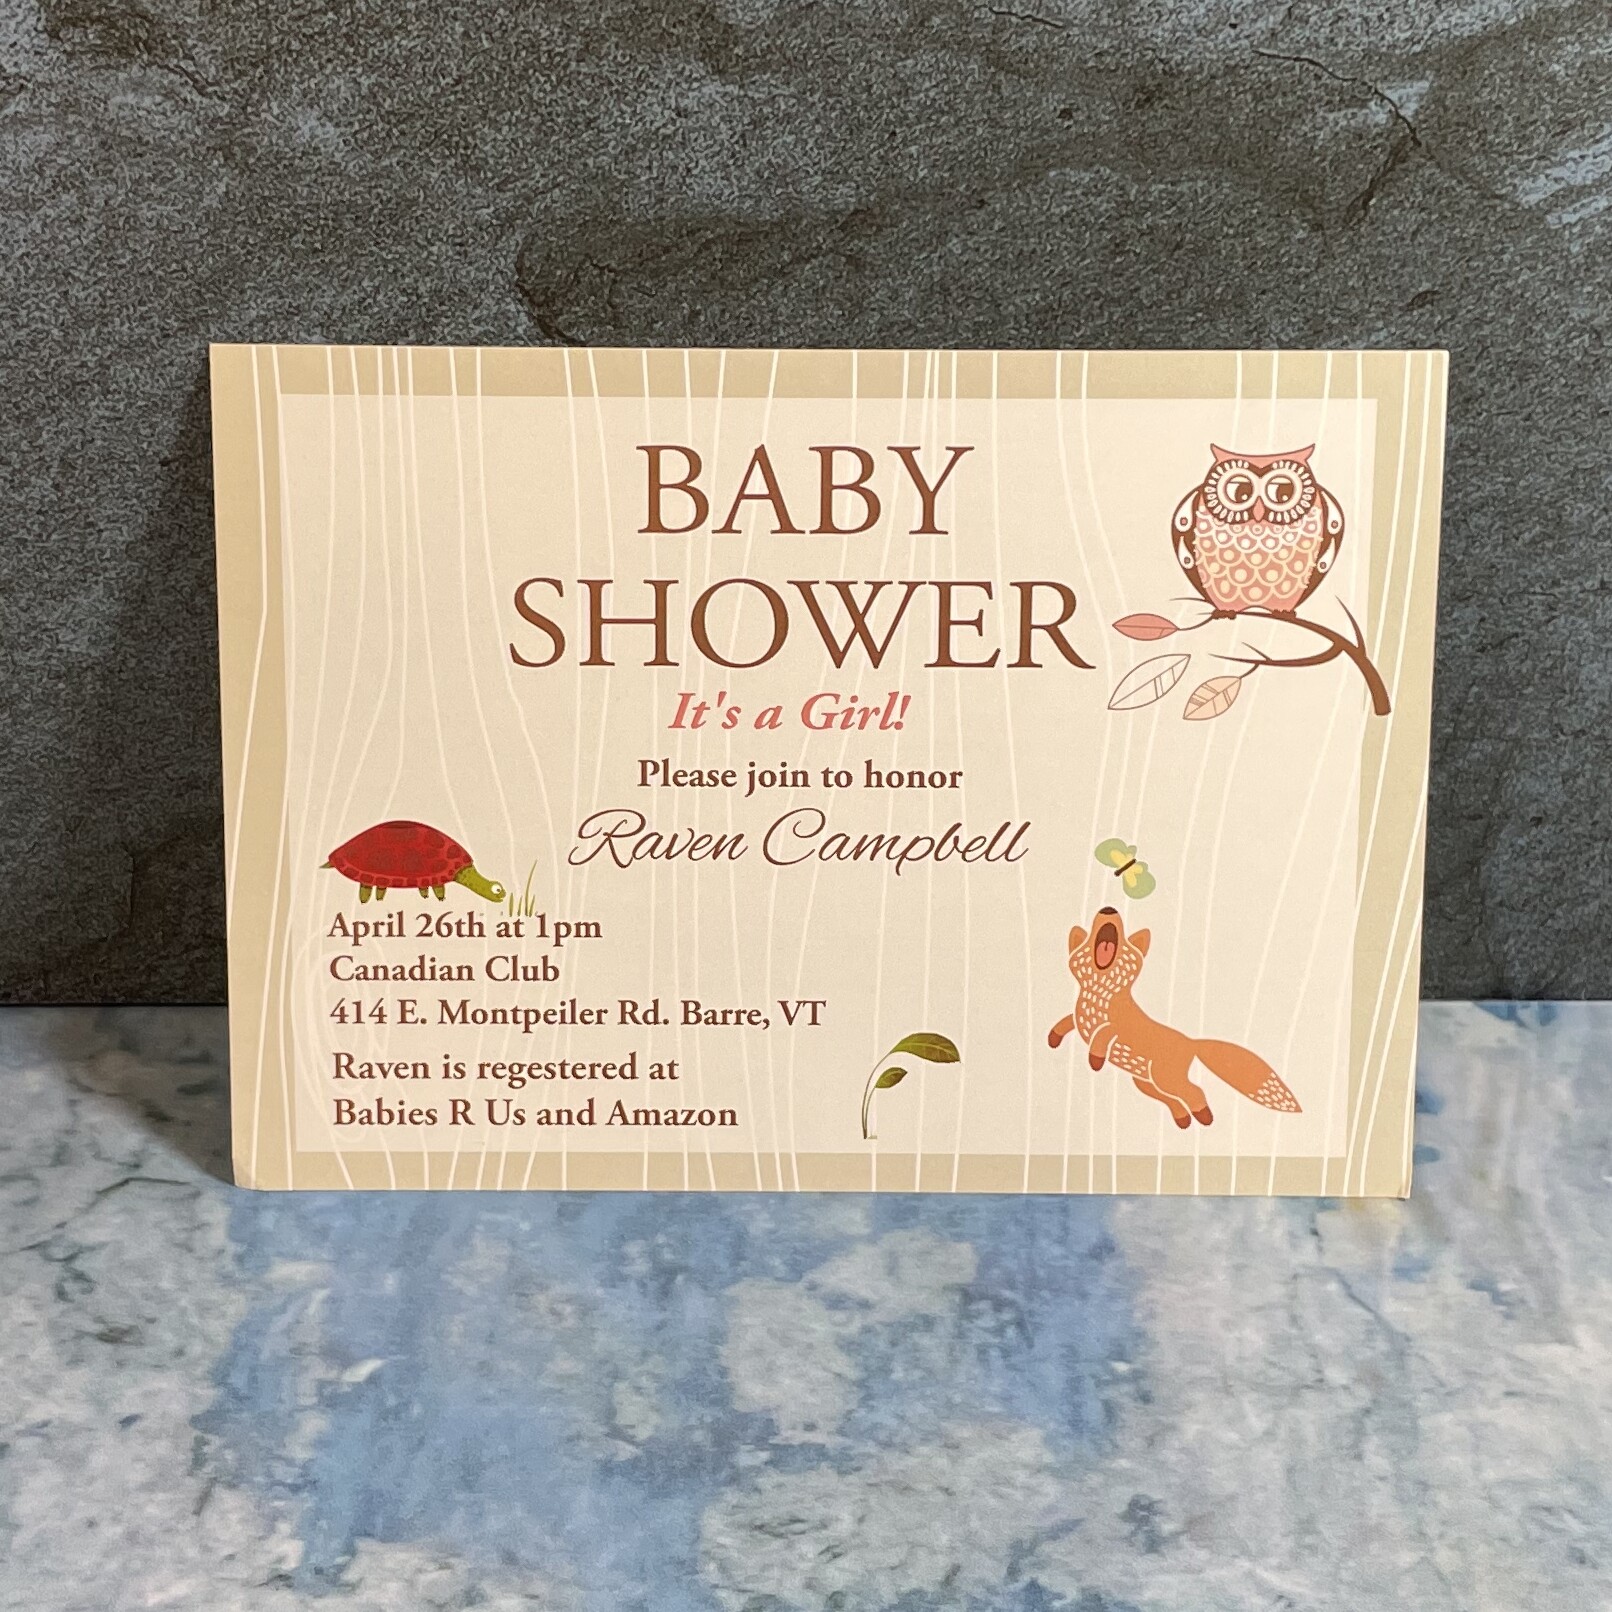 Baby Shower Invitation honoring Raven